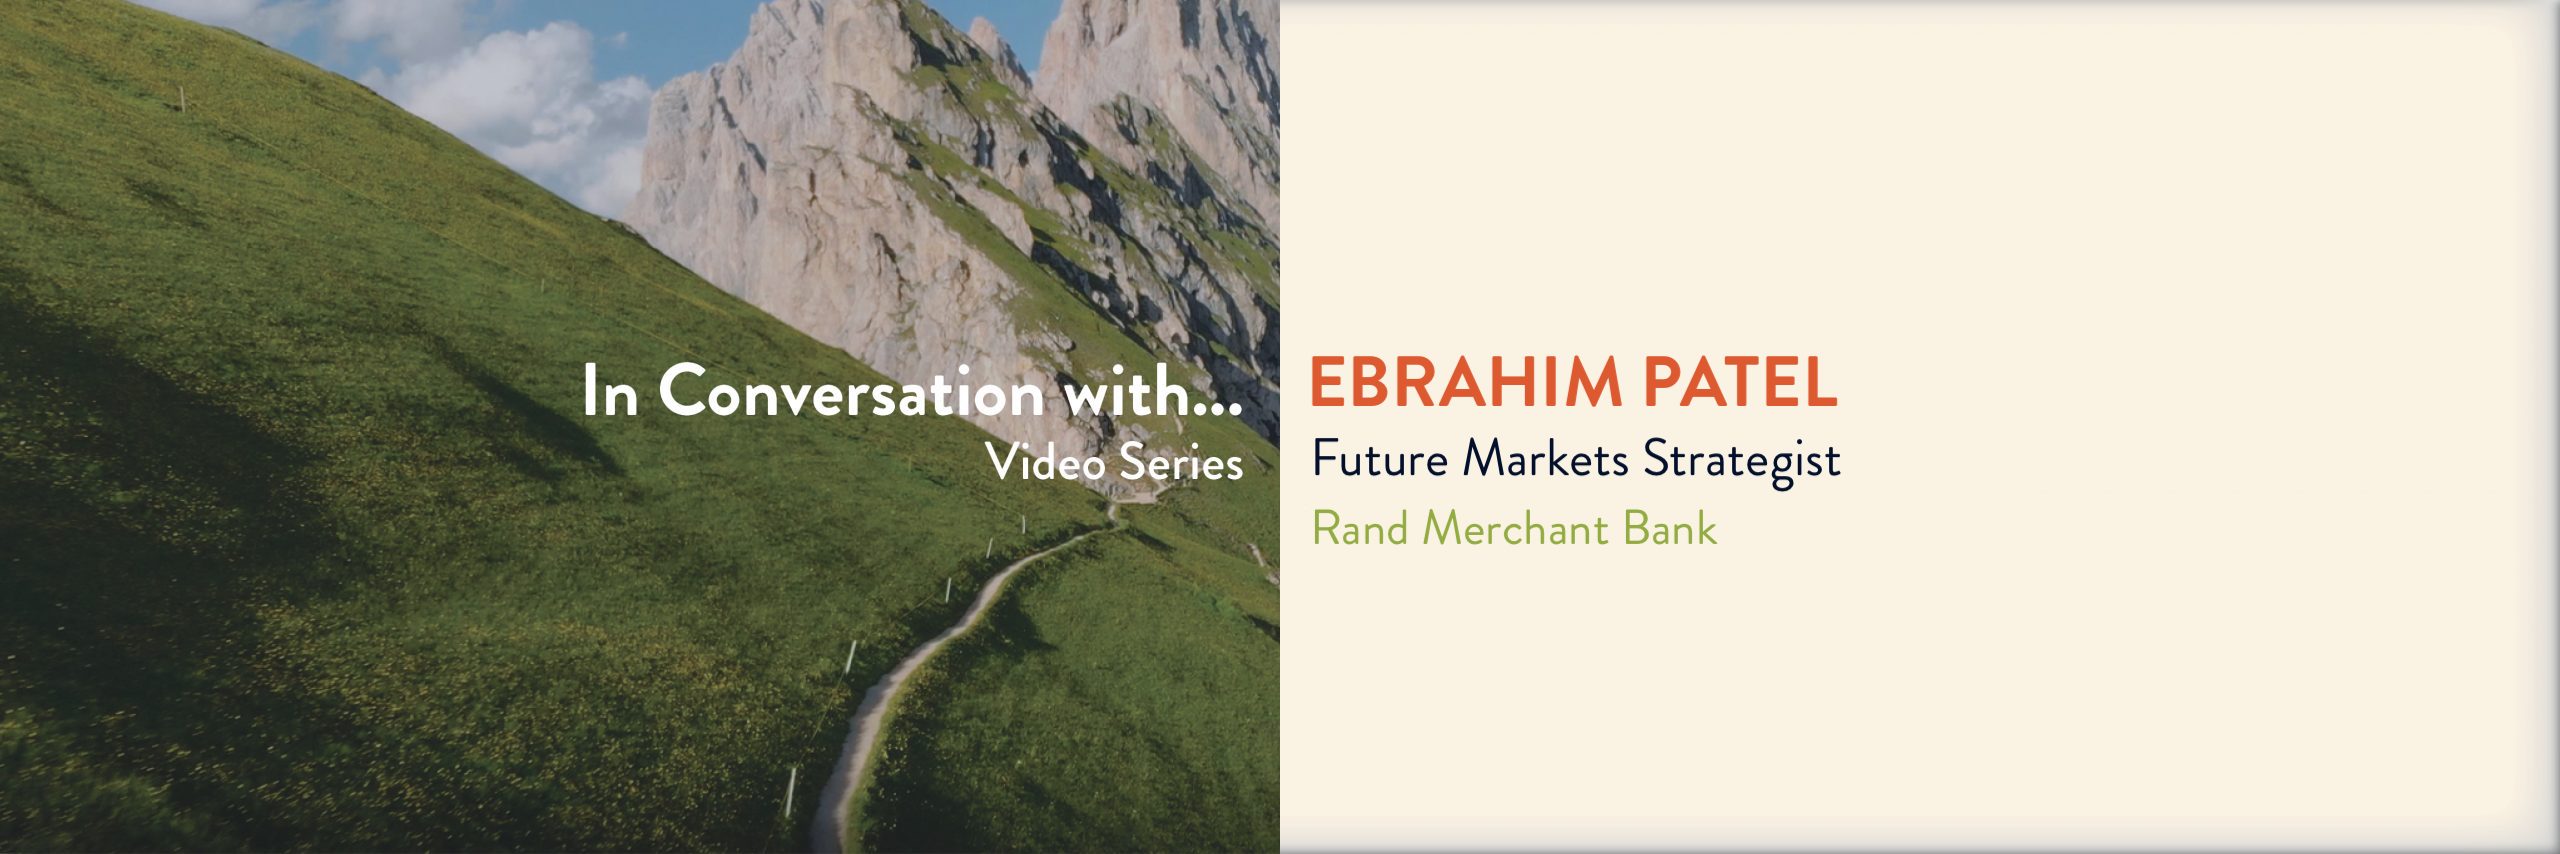 In Conversation With.. Video Series: Ebrahim Patel